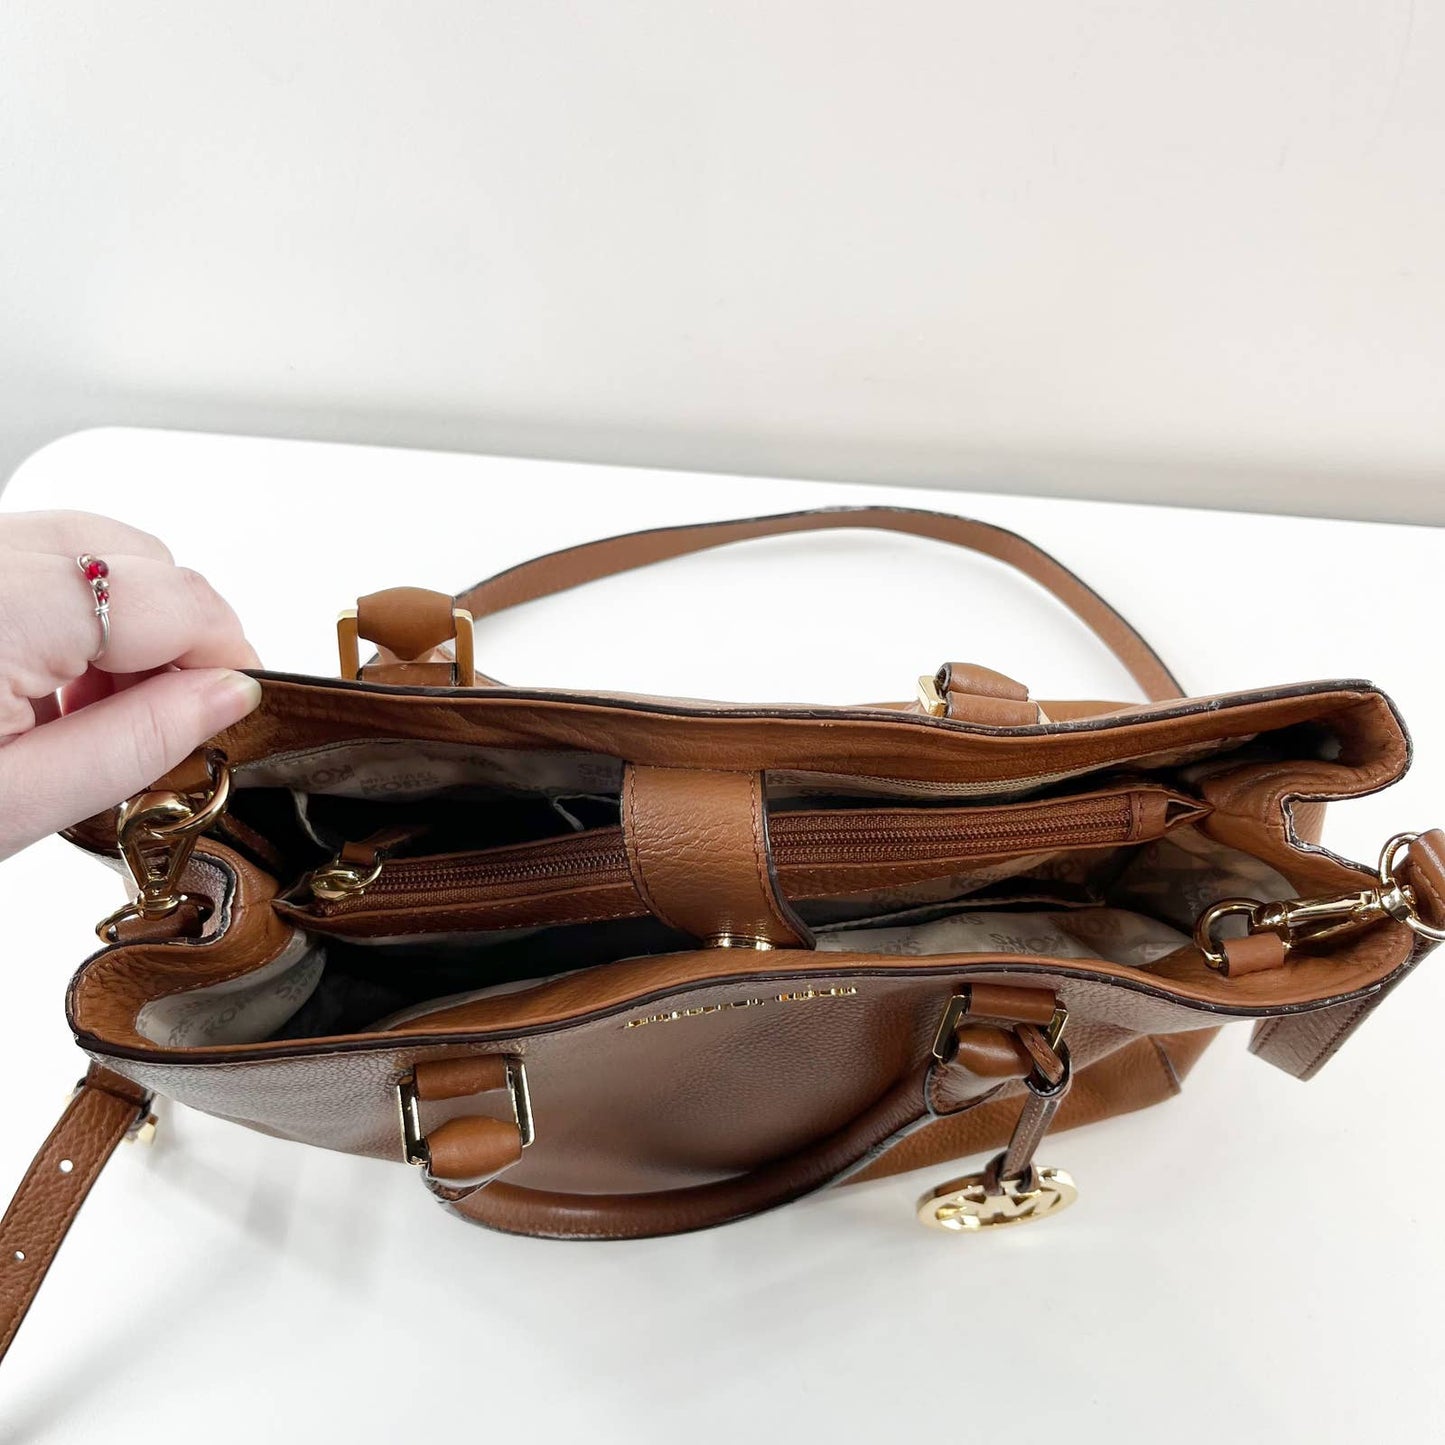 Michael Kors Kellen Saffiano Pebbled Leather Tote Handbag Purse Brown Gold